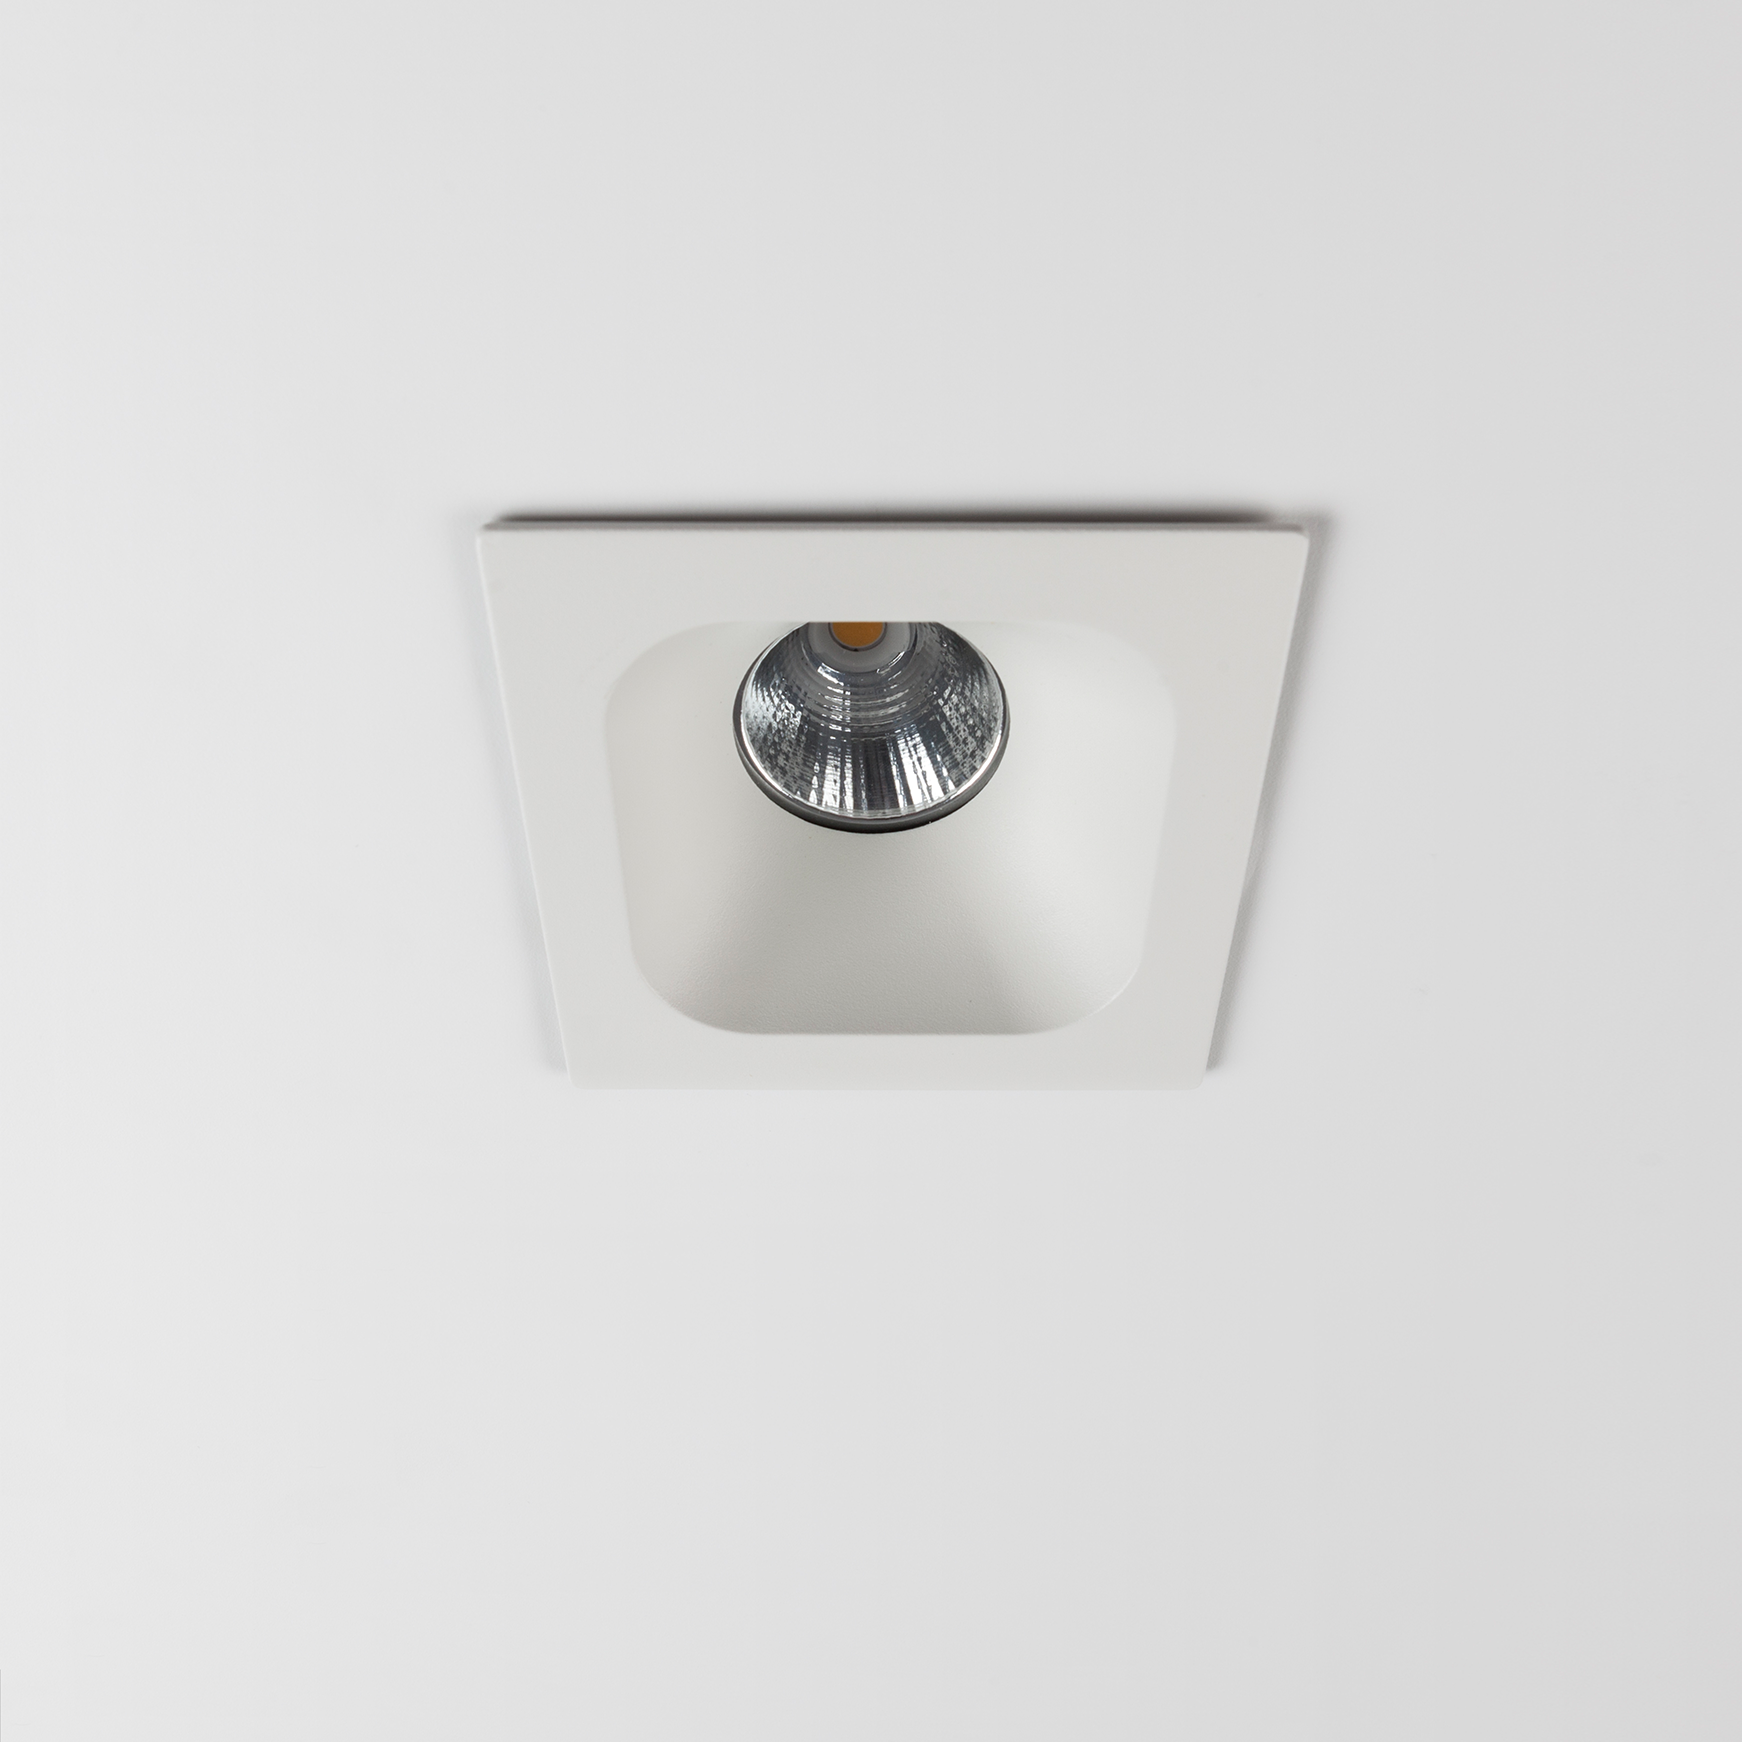 Angle Carre 2.0 13W Showerproof LED Down Light IP44 Rated